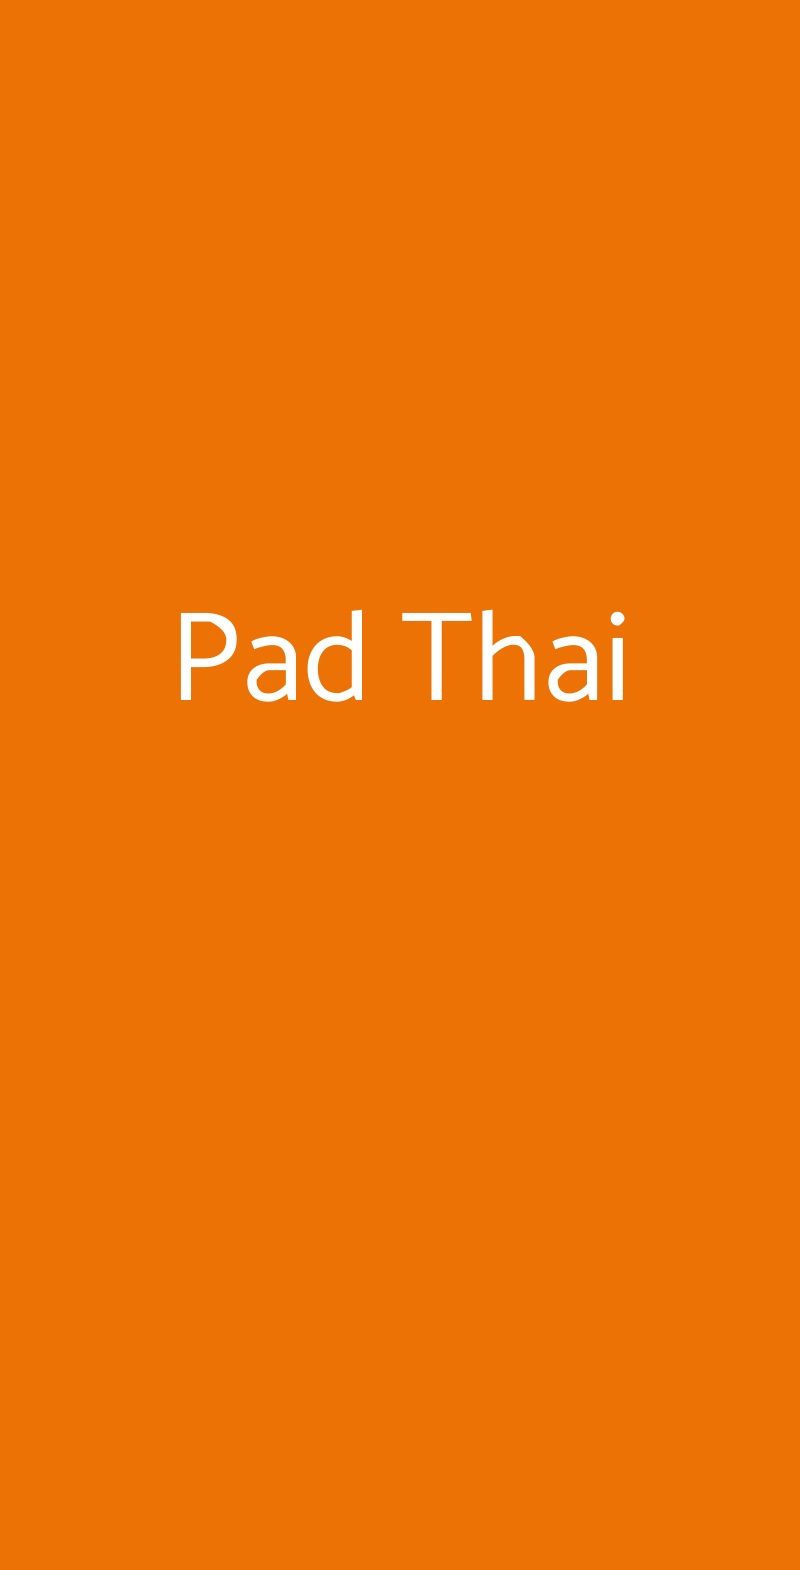 Pad Thai Napoli menù 1 pagina